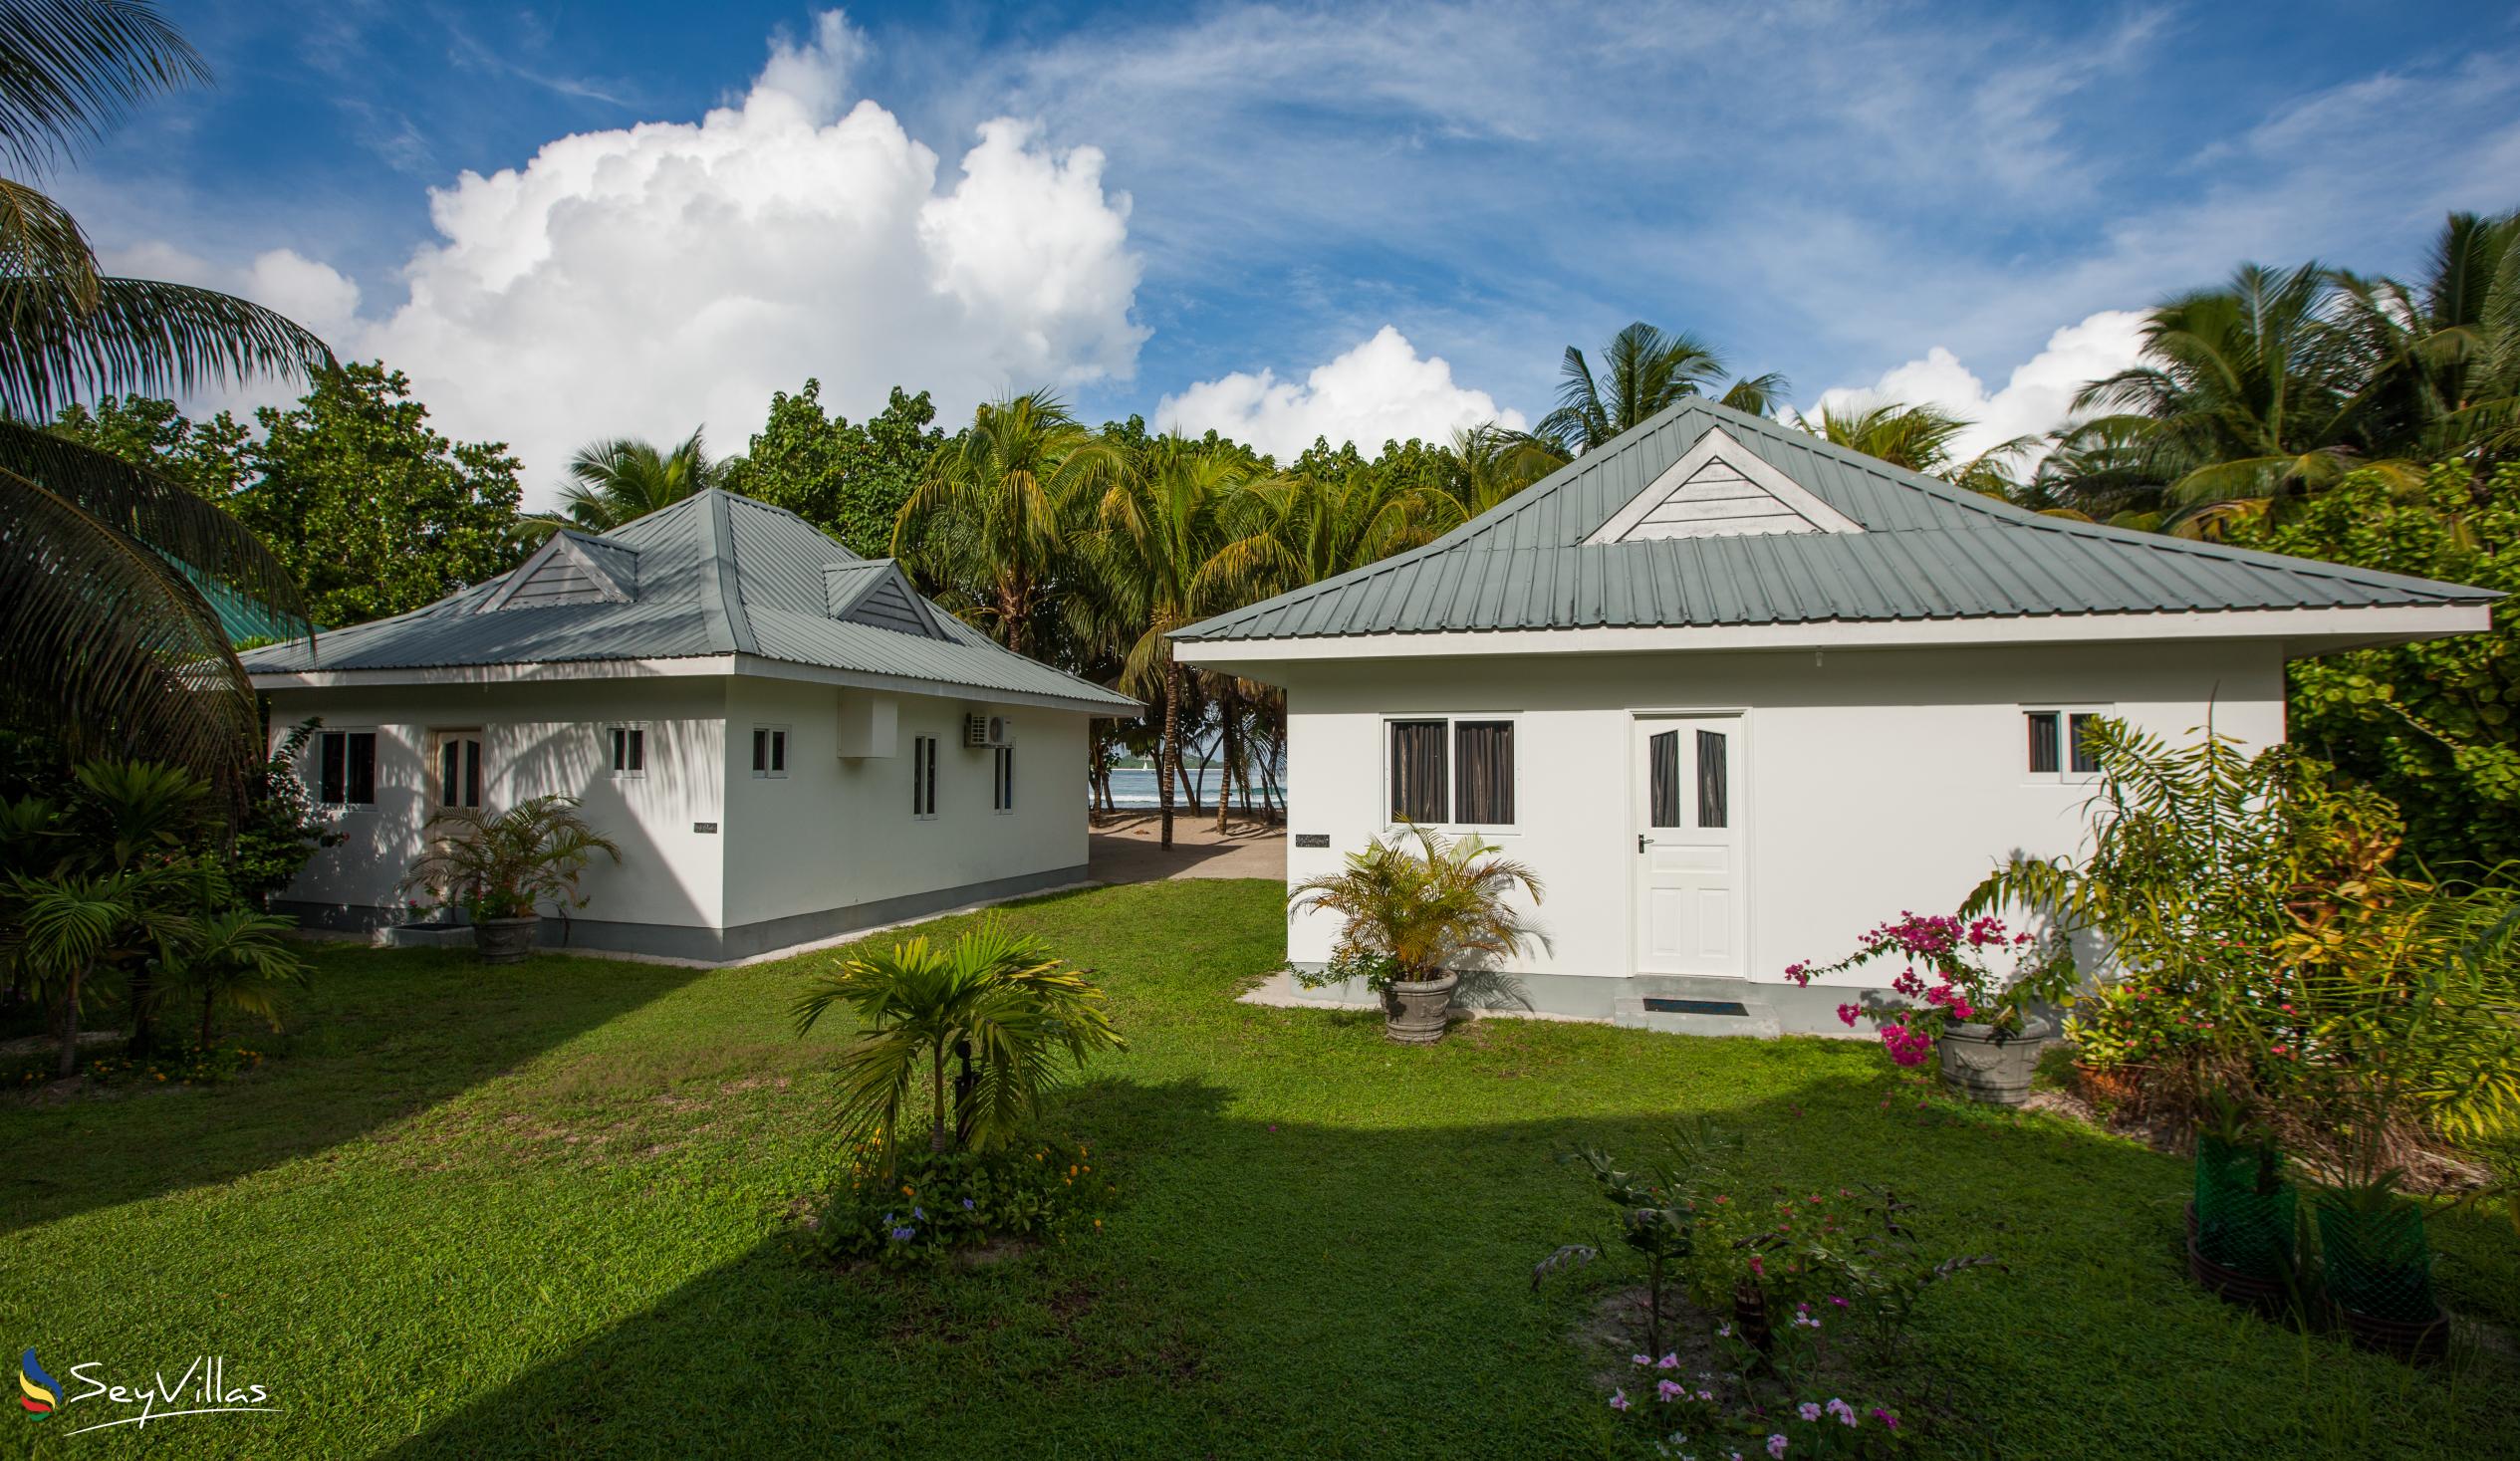 Photo 2: Cap Jean Marie Beach Villas - Outdoor area - Praslin (Seychelles)